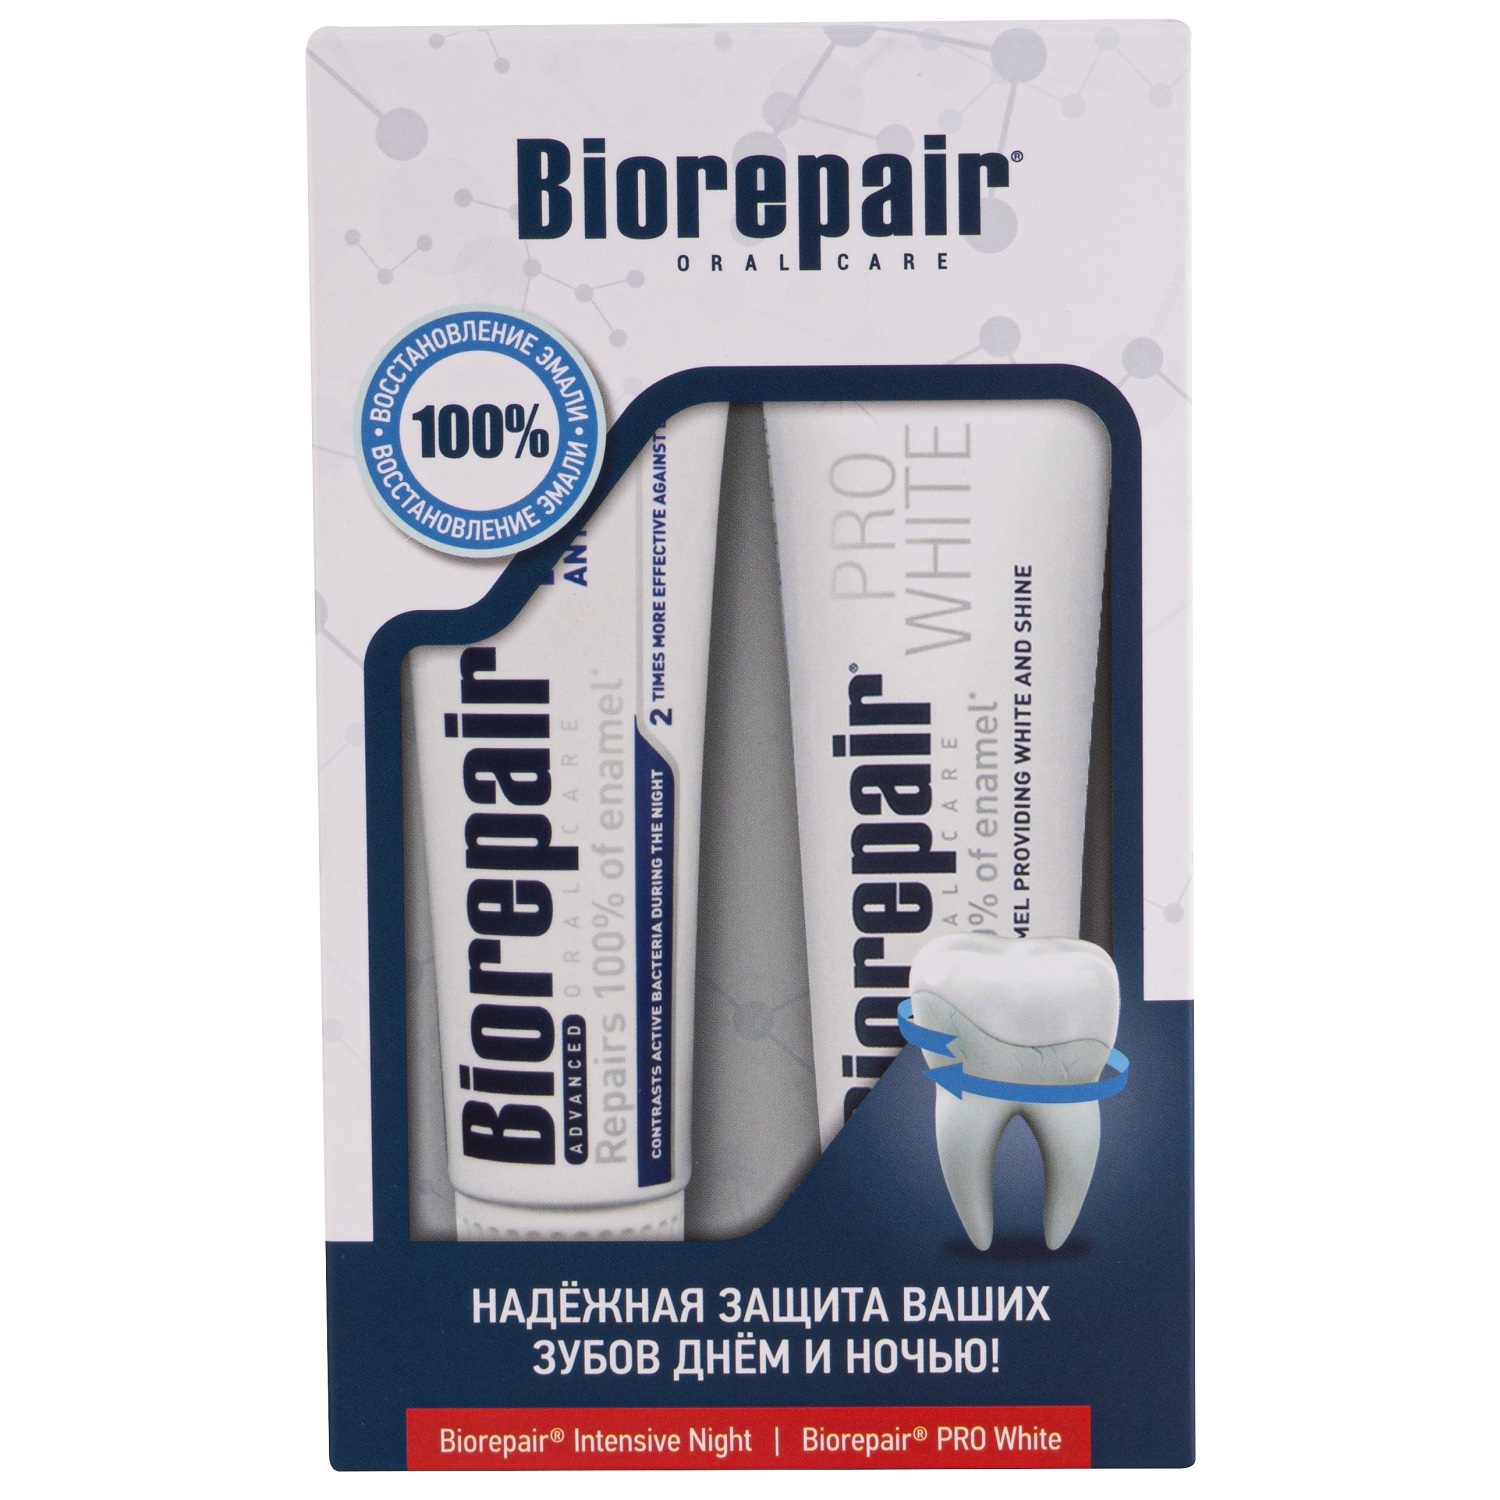 Biorepair Набор зубных паст Защита и блеск: Pro White 75 мл + Intensive Night Repair 75 мл (Biorepair, Отбеливание и лечение) biorepair набор зубных паст для защиты эмали 2х75 мл biorepair отбеливание и лечение